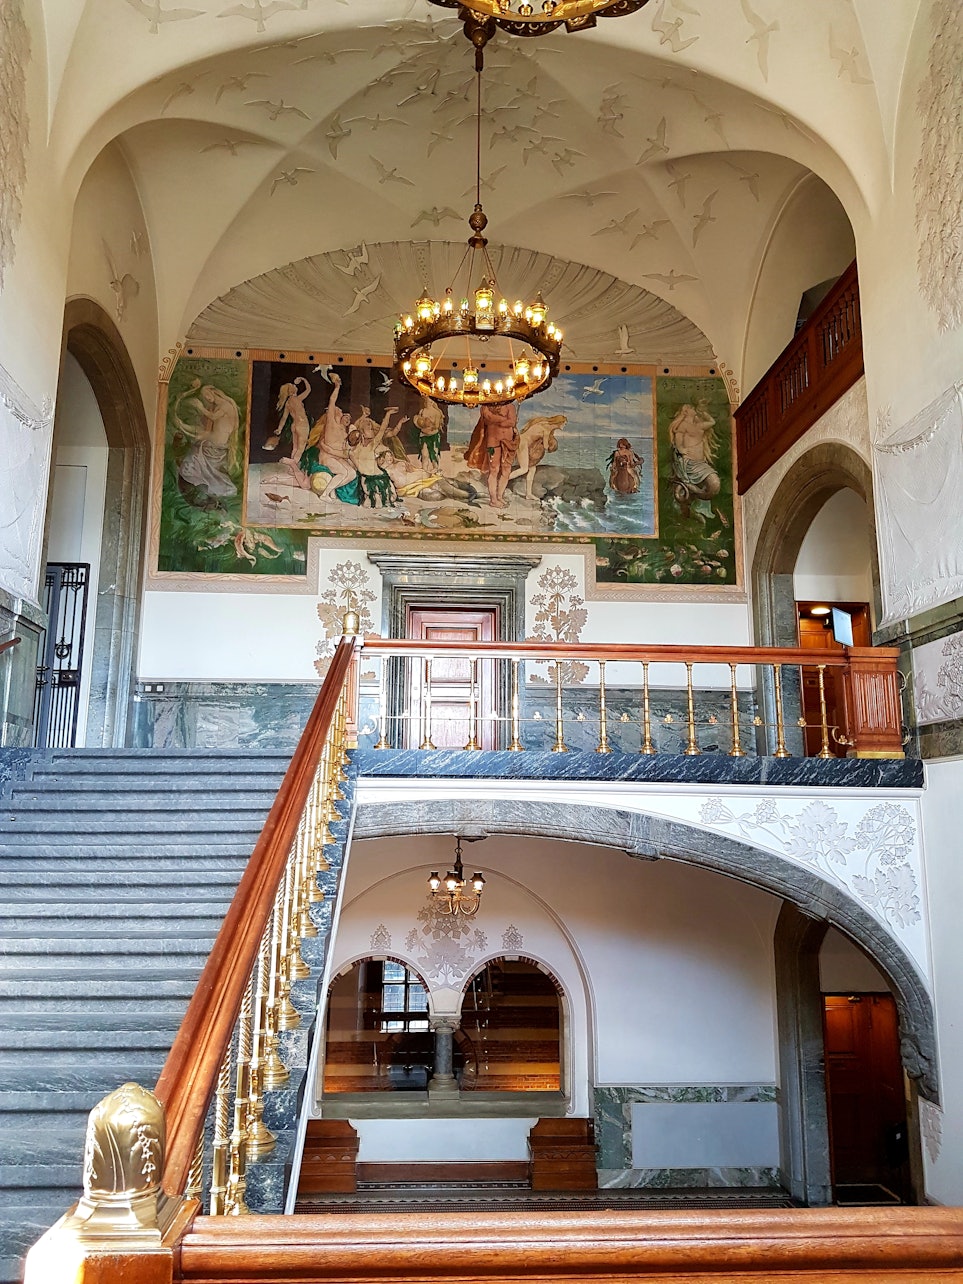 Copenhagen City Hall: Guided Tour - Accommodations in Copenhagen